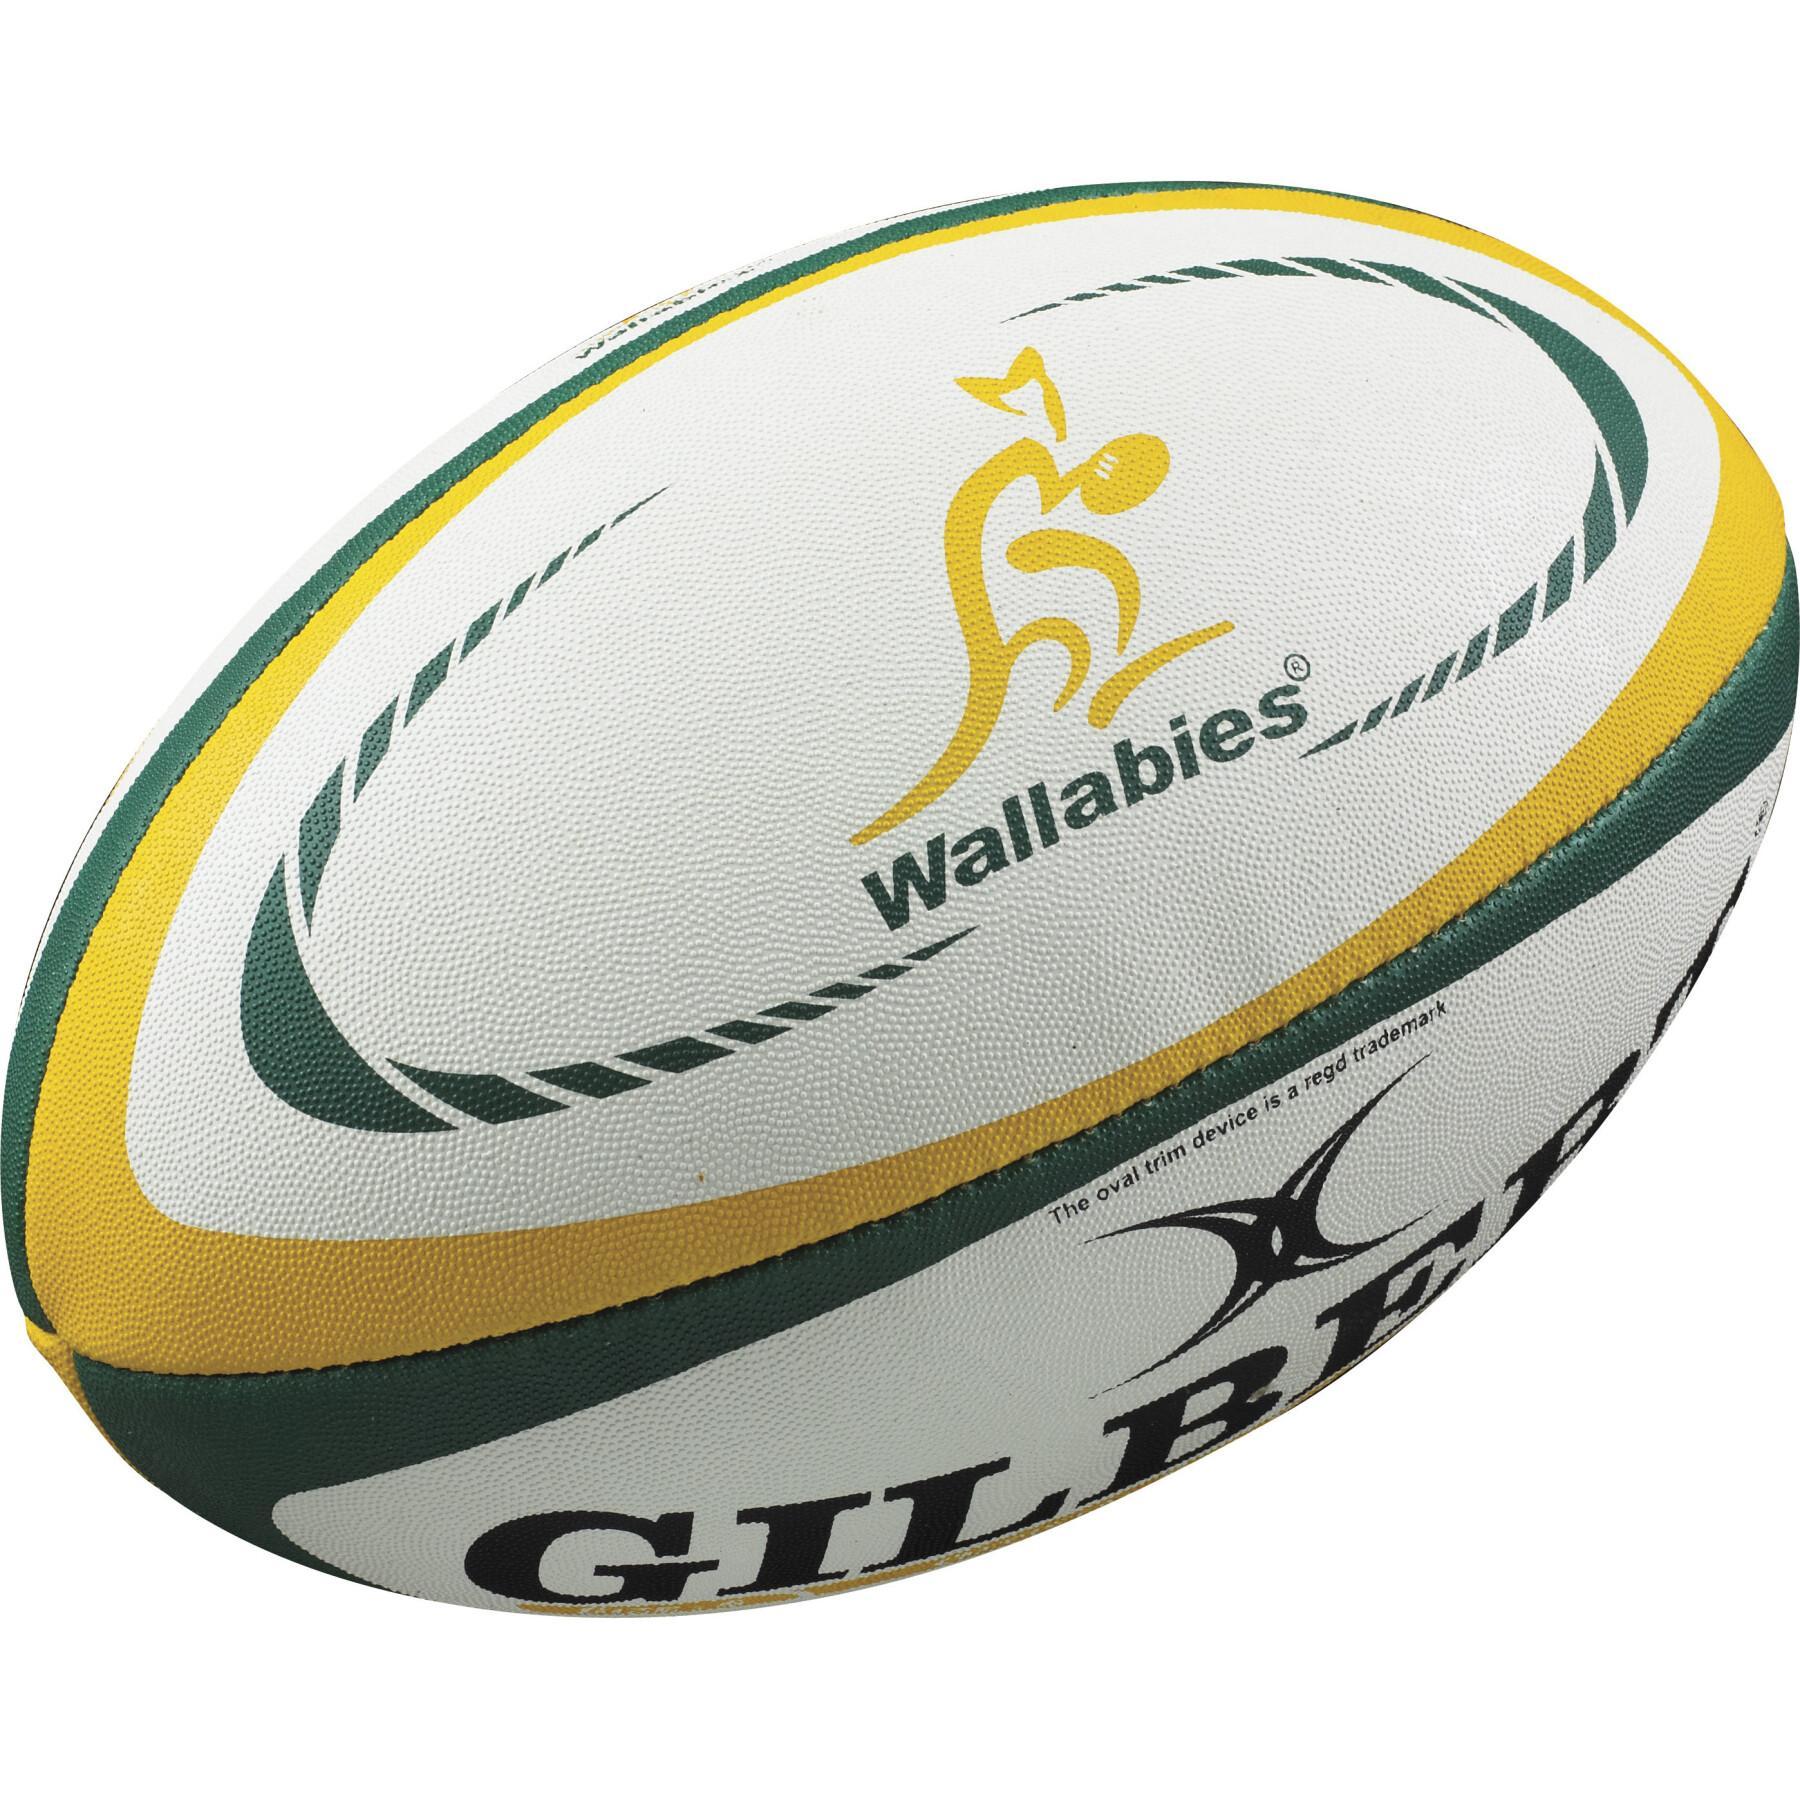 Replica rugby ball Gilbert Australie (taille 5)